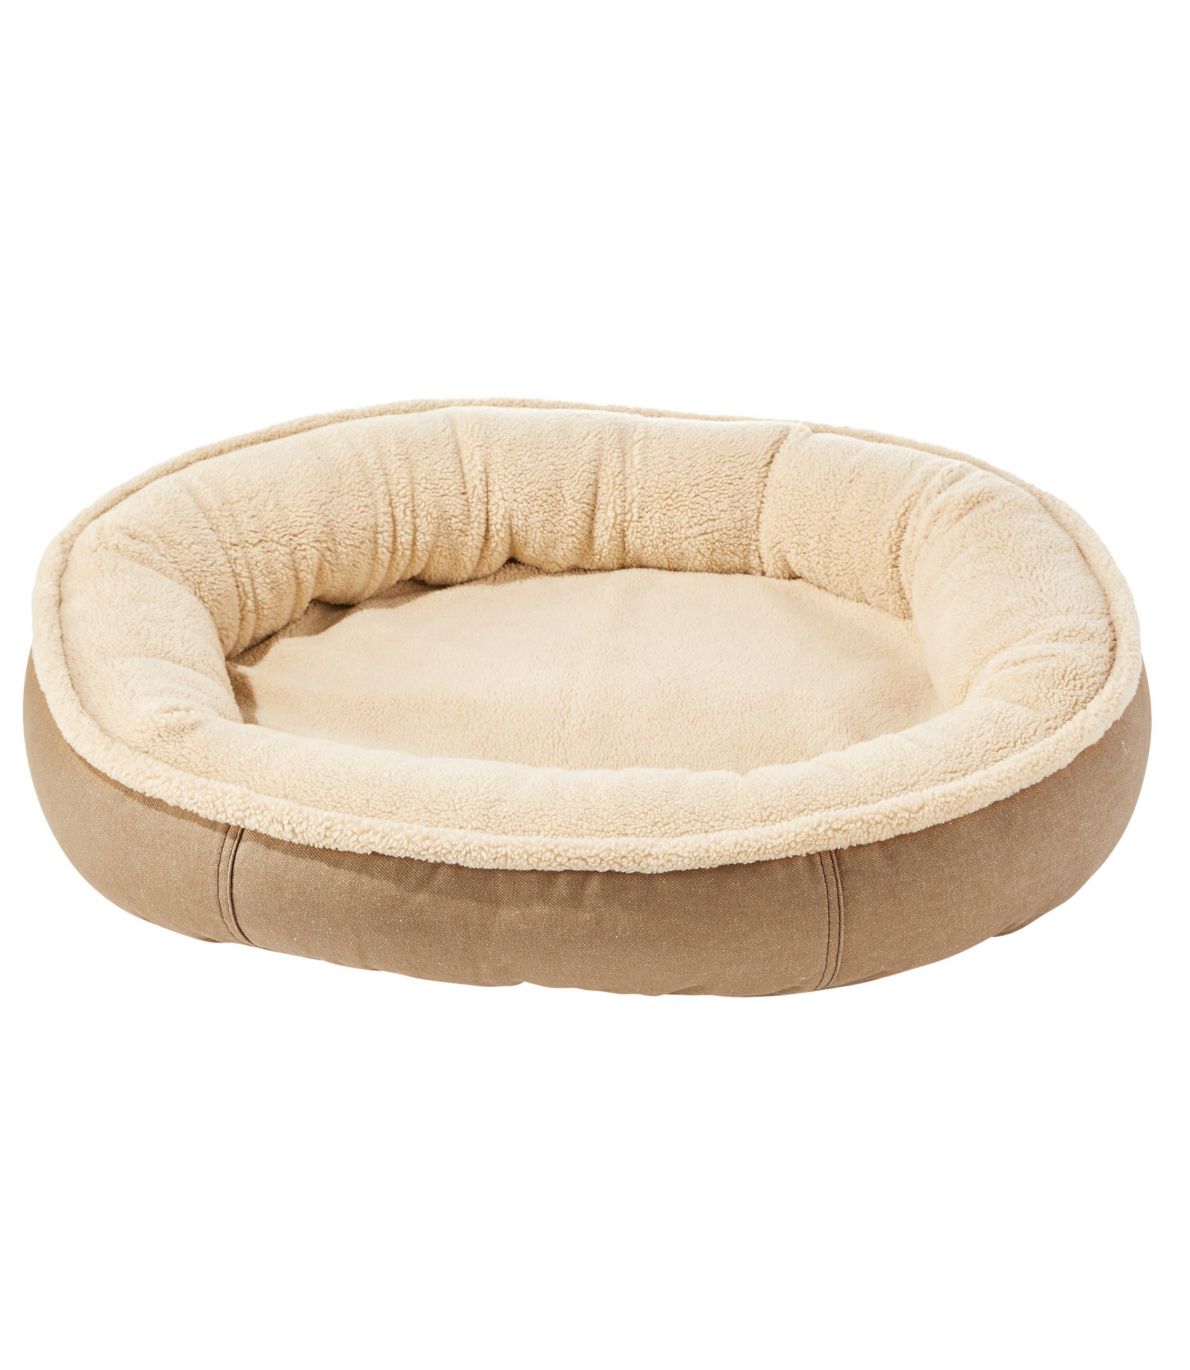 Premium Oval Bolster Dog Bed